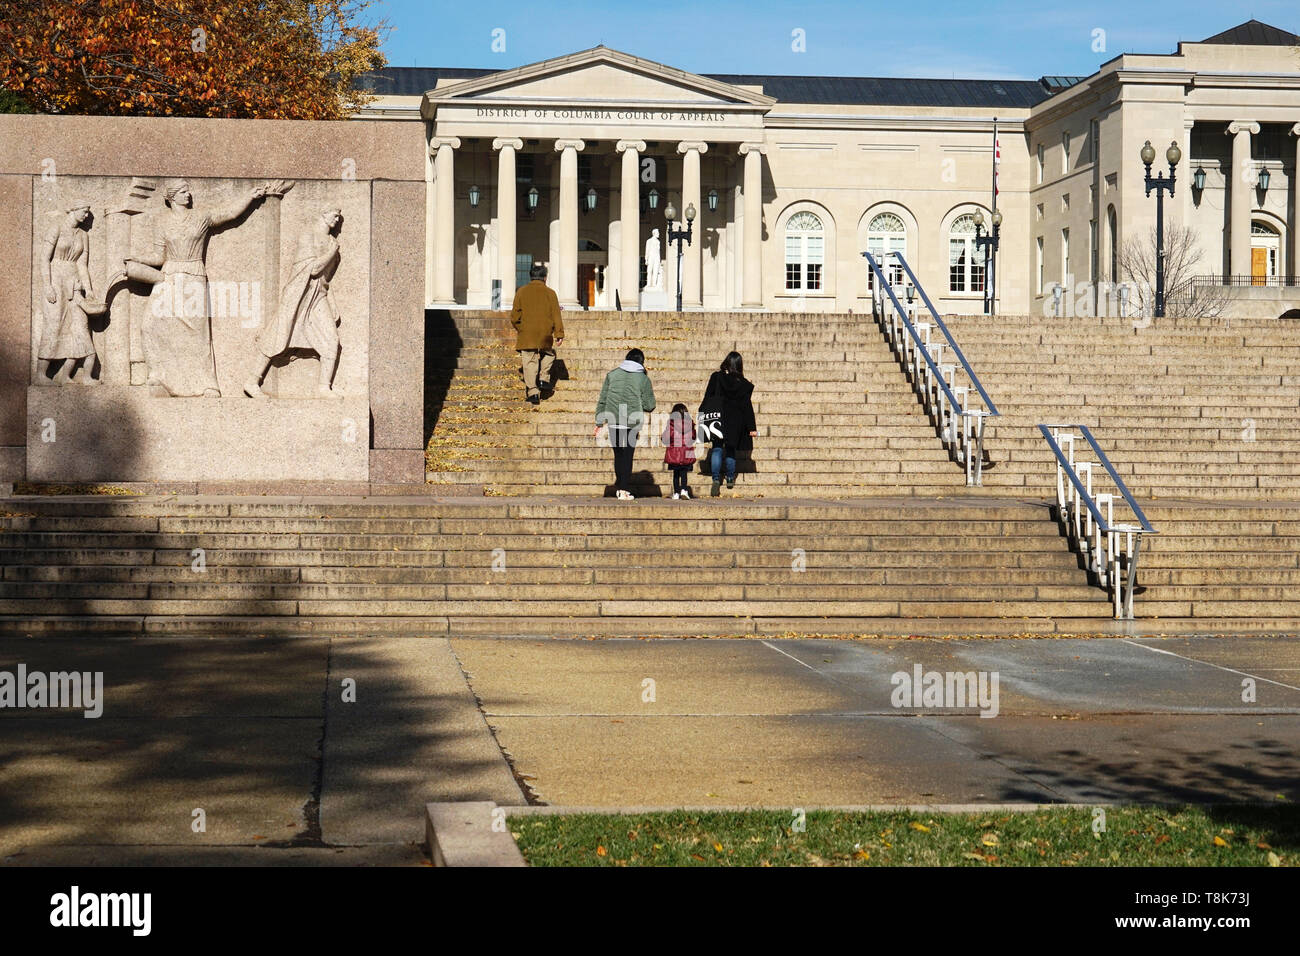 Distrikt von Columbia Appellationsgericht in Justiz Square. Washington D.C. USA Stockfoto